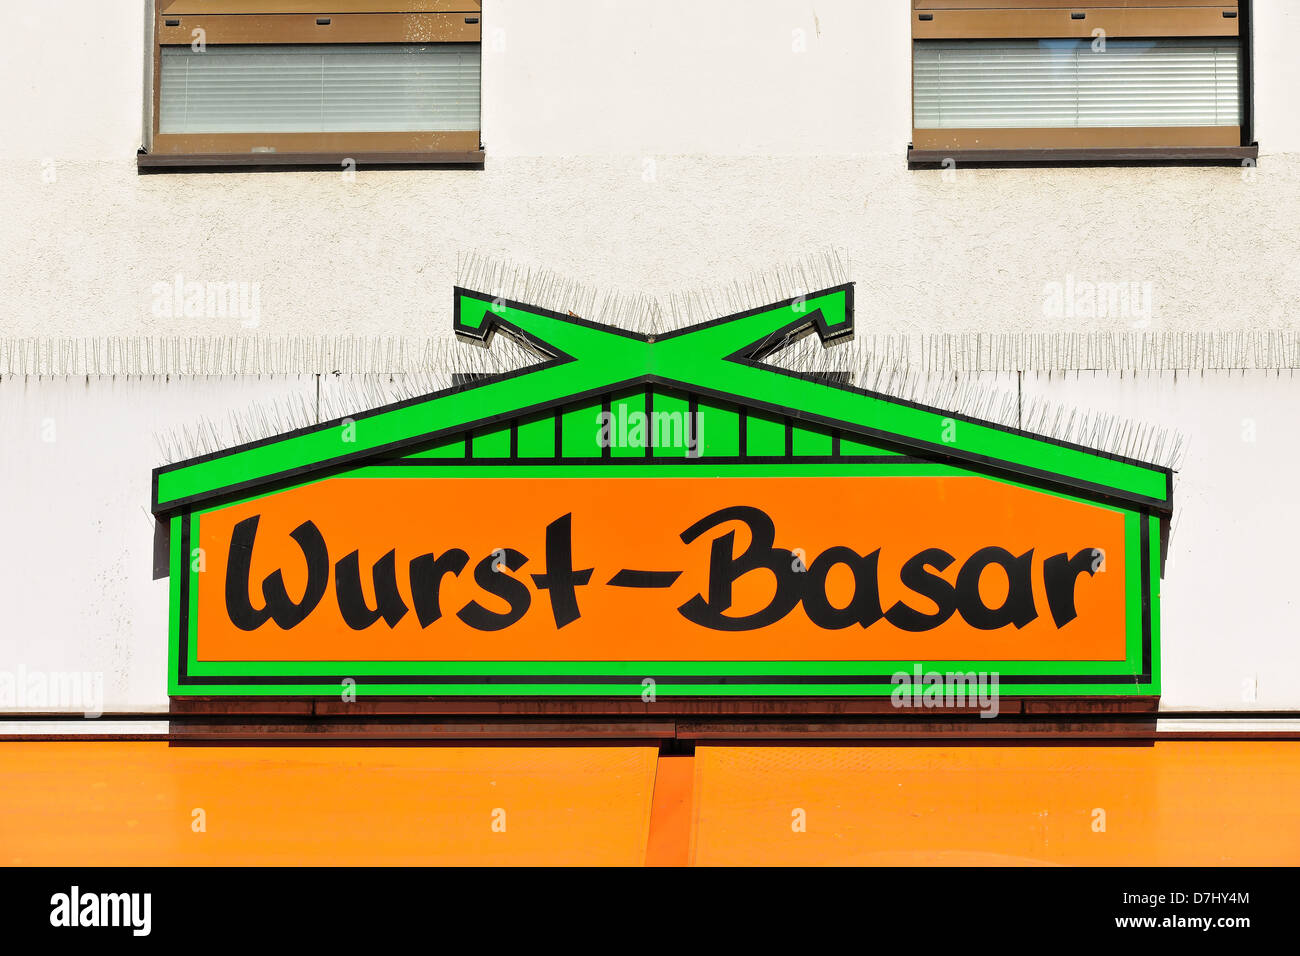 Companies, company signs, names, logo, Wurst-Basar Stock Photo